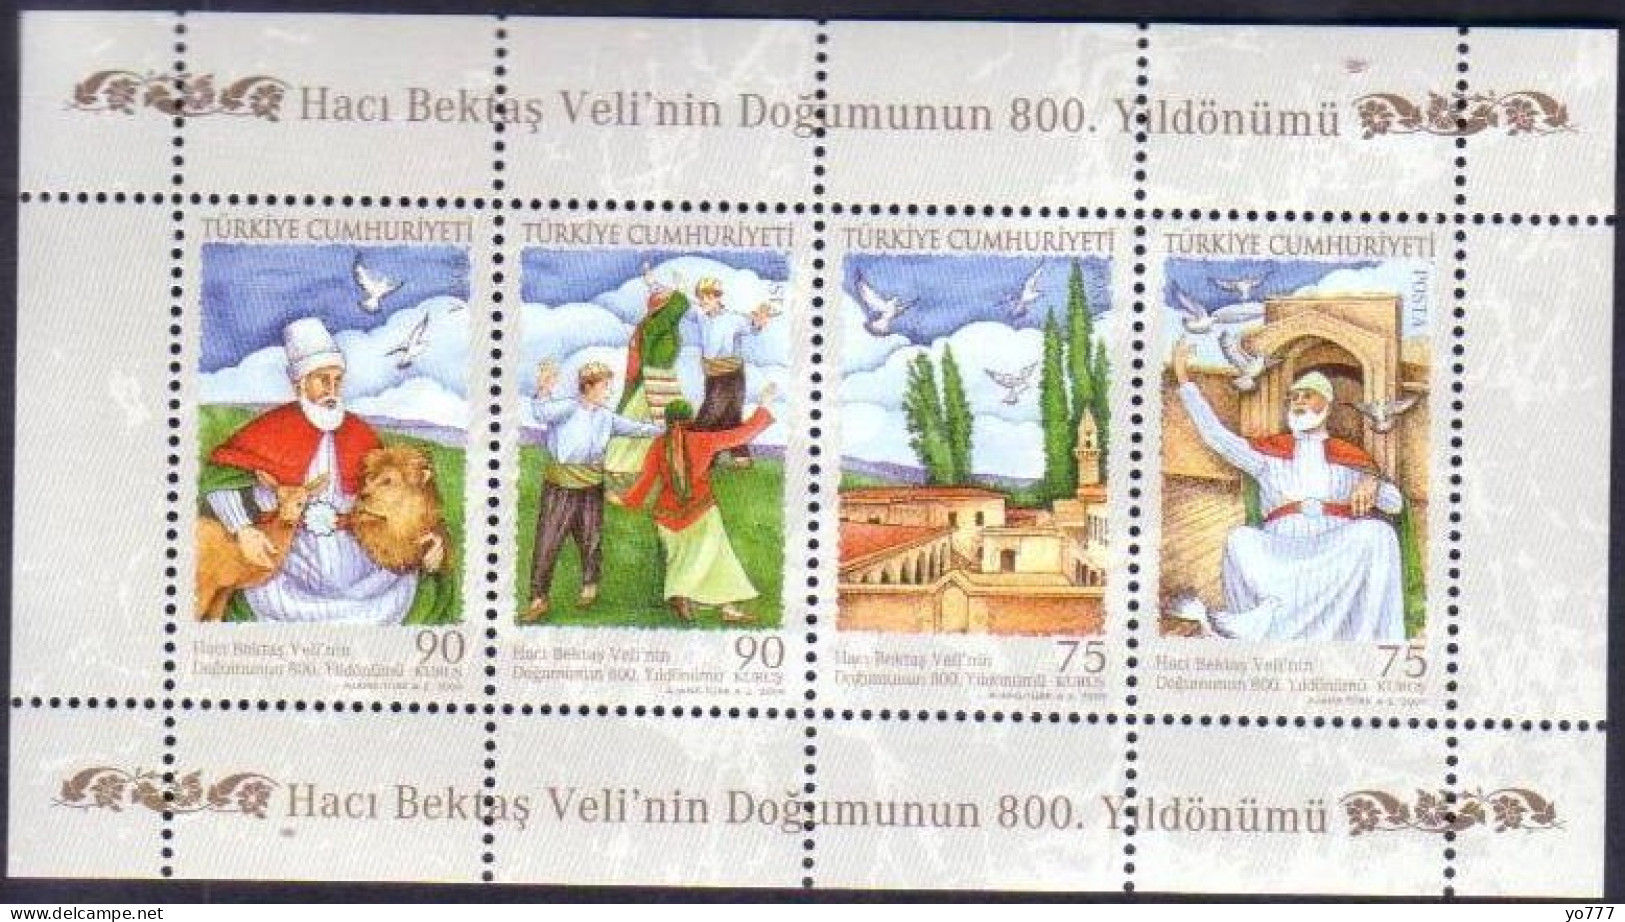 (3773-76) TURKEY 800th ANNIVERSARY OF THE BIRTH OF HACI BEKTAS VELI SOUVENIR SHEET MNH** - Nuovi